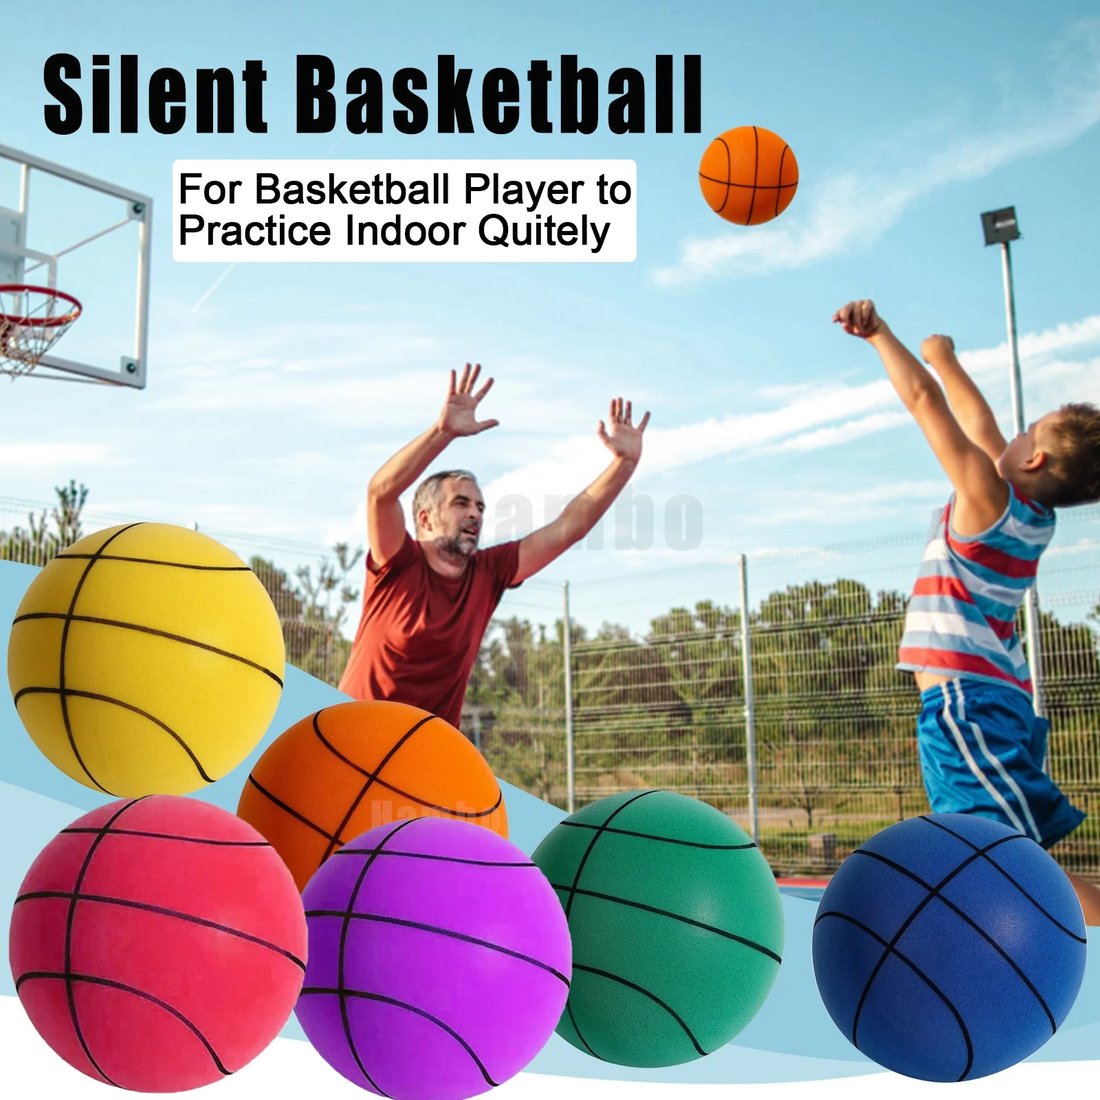 The Handleshh Silent Basketball